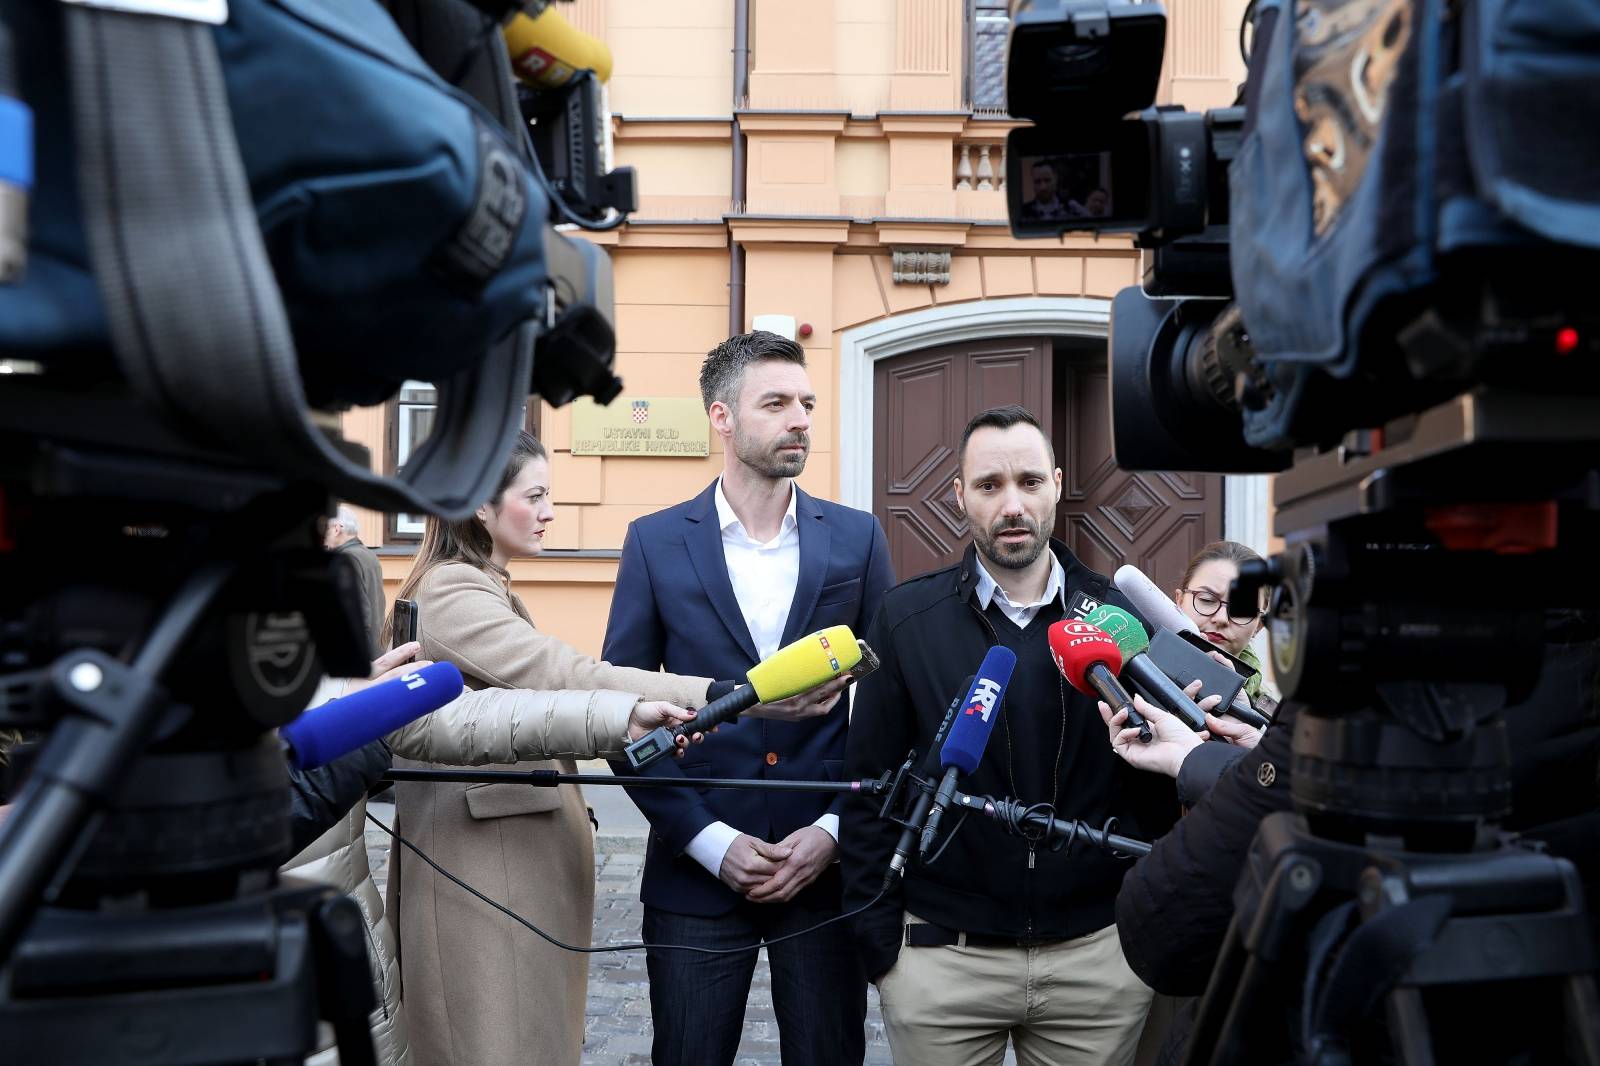 Zagreb: Podnesen zahtjev za ocjenu ustavnosti Zakona o udomiteljstvu